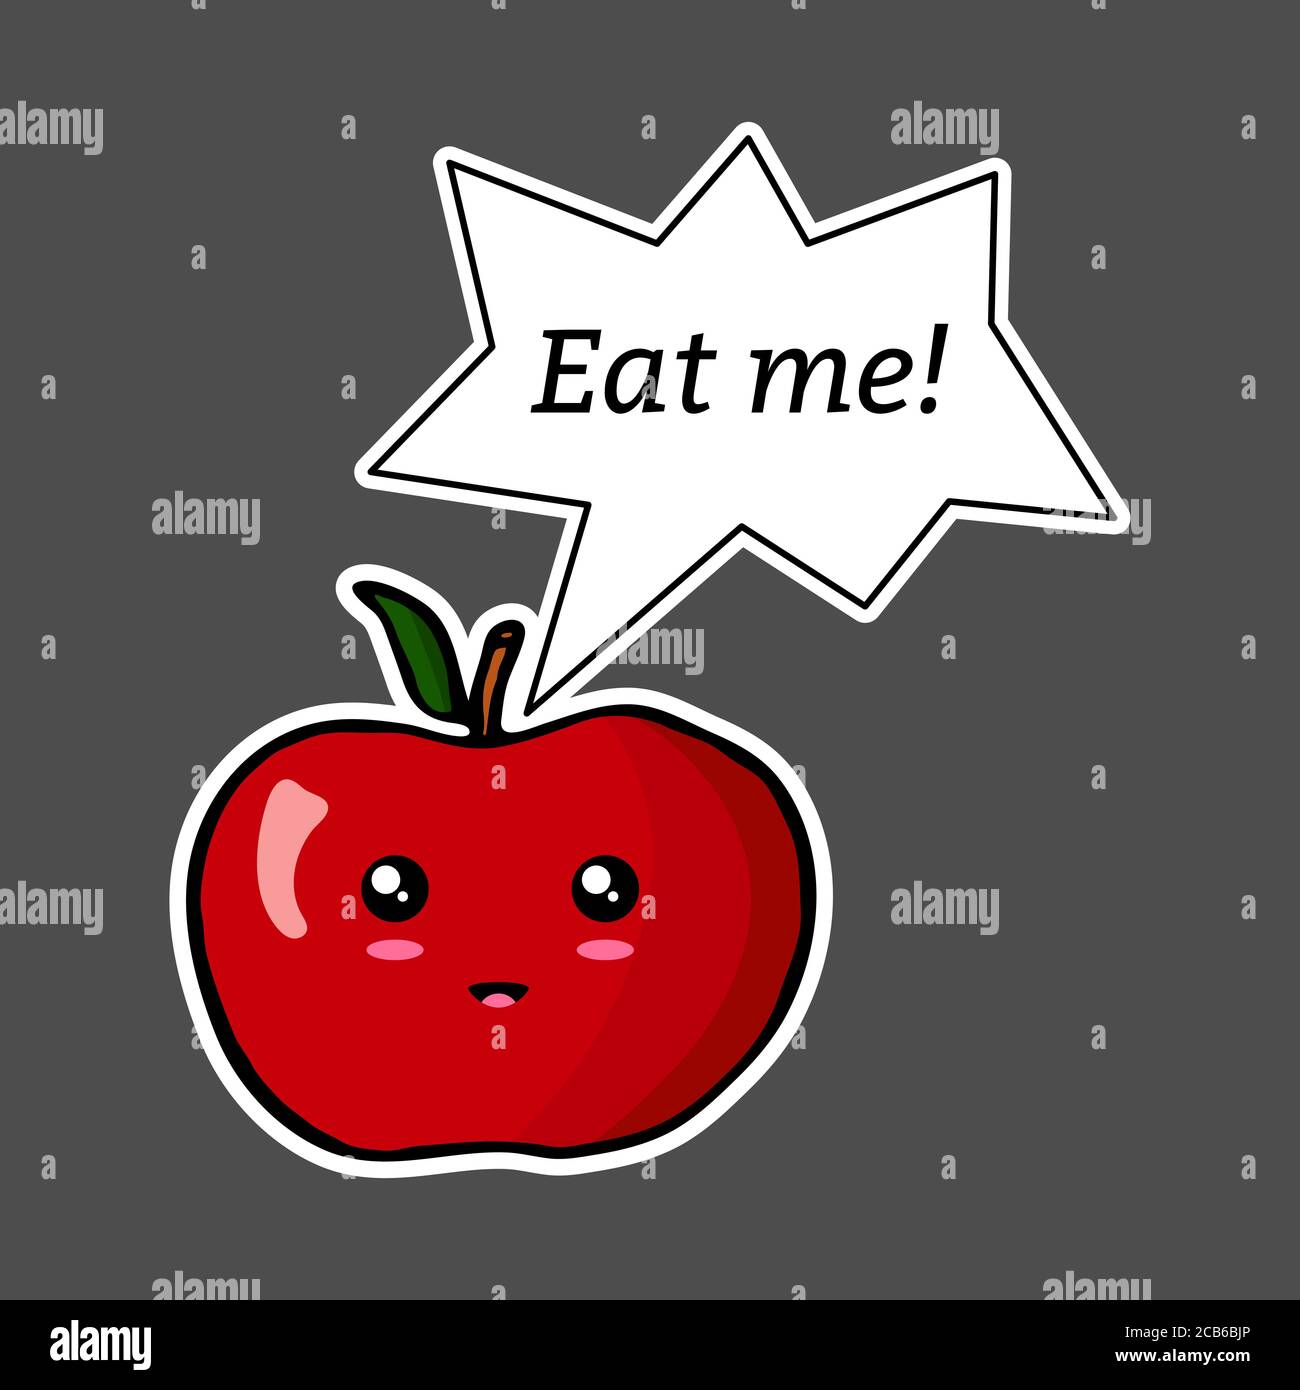 Kawaii sticker colorful cartoon apple with speech bubble ‘Eat me!’. Vector illustration isolated on dark background. Stock Vector